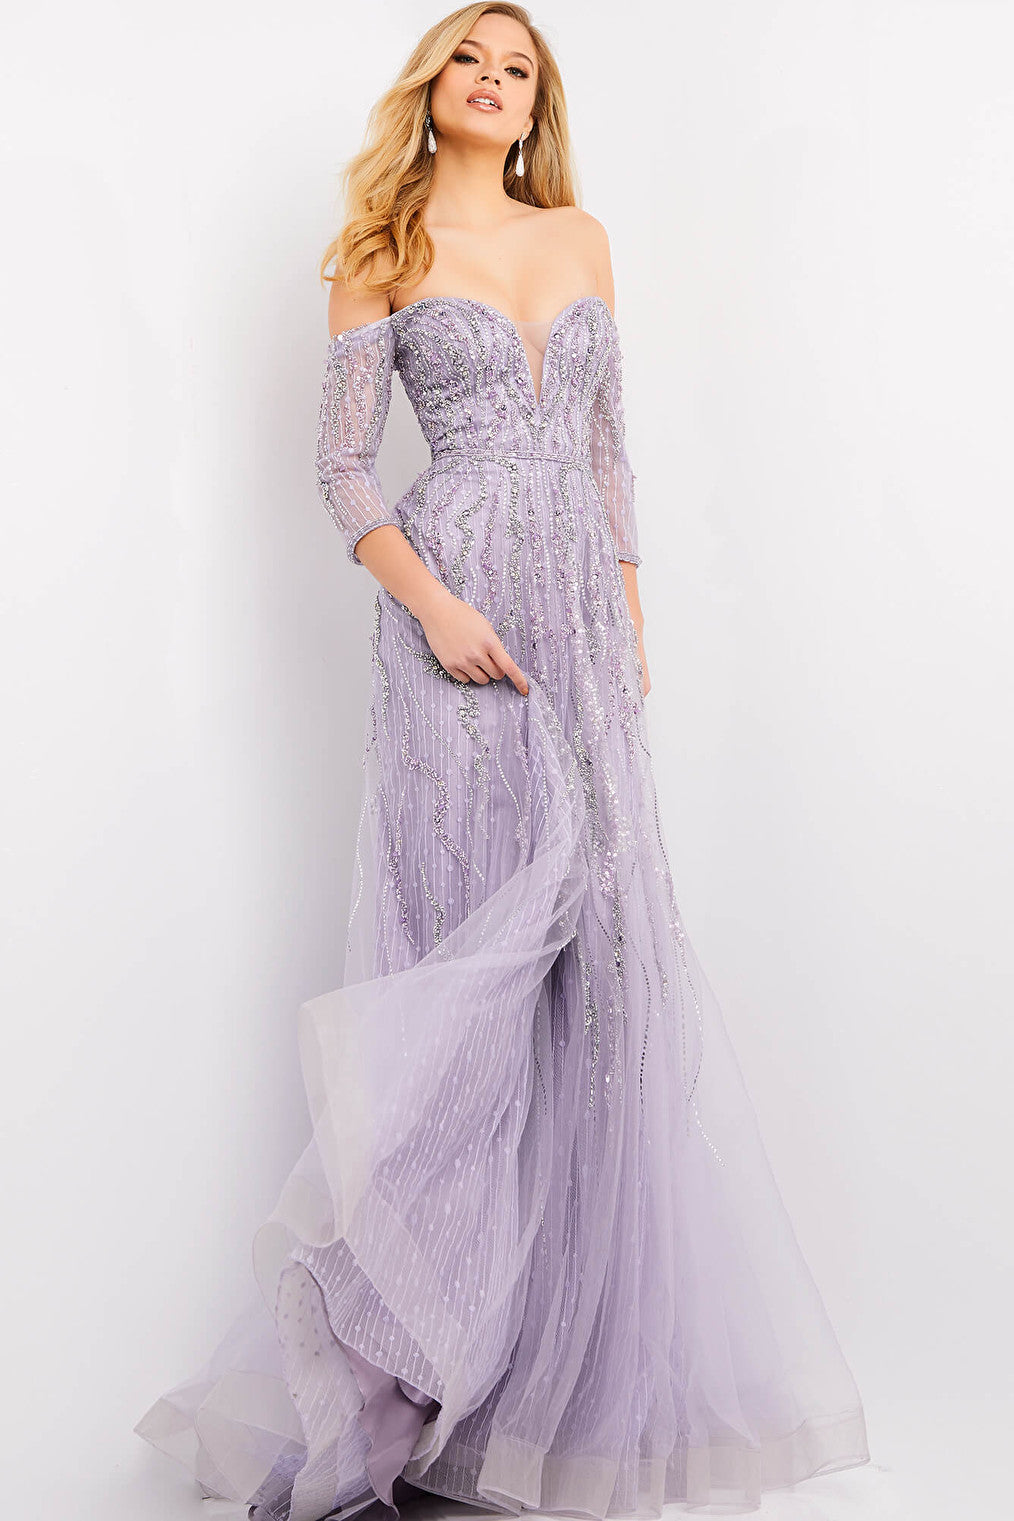 purple tulle wedding dress 04632